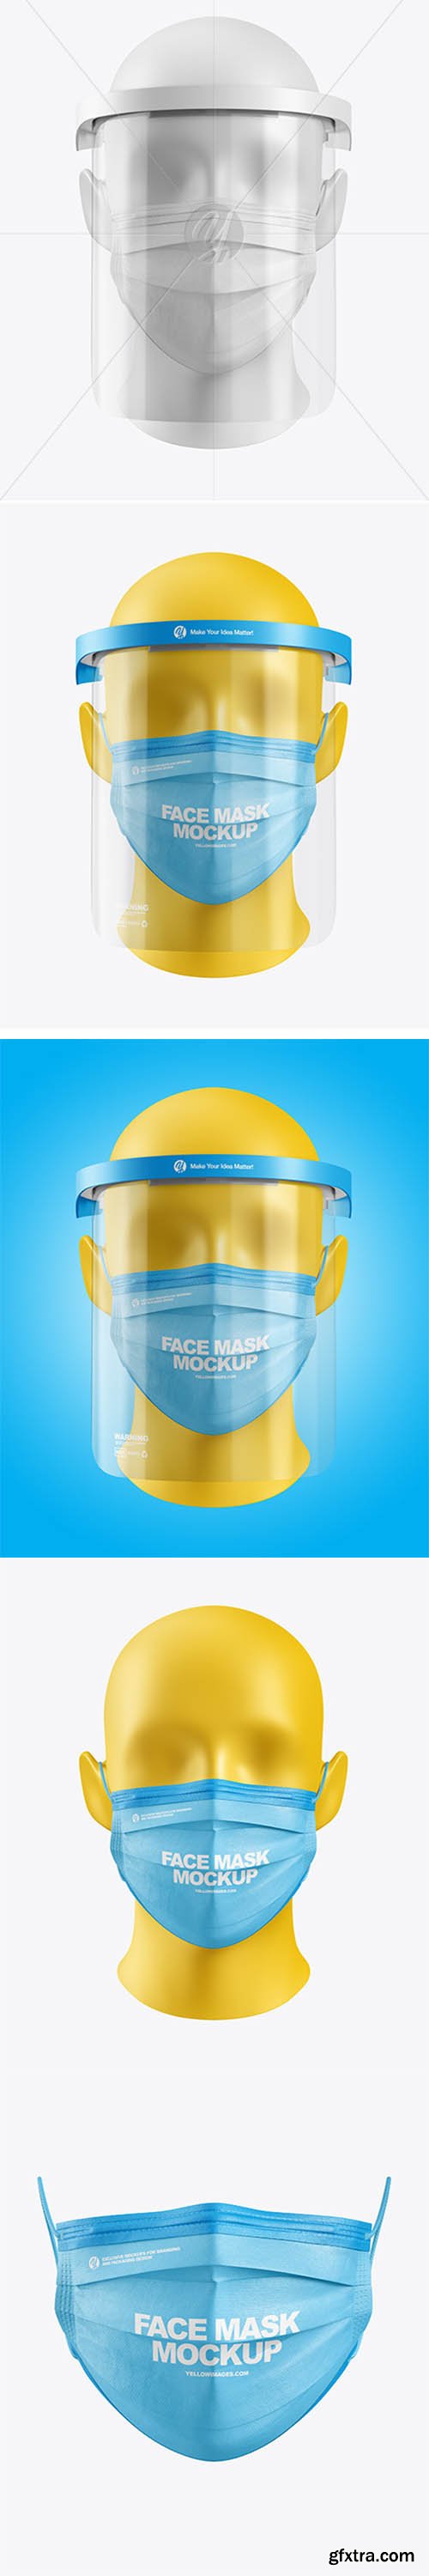 Download Face Mask & Face Shield Mockup 64074 » GFxtra